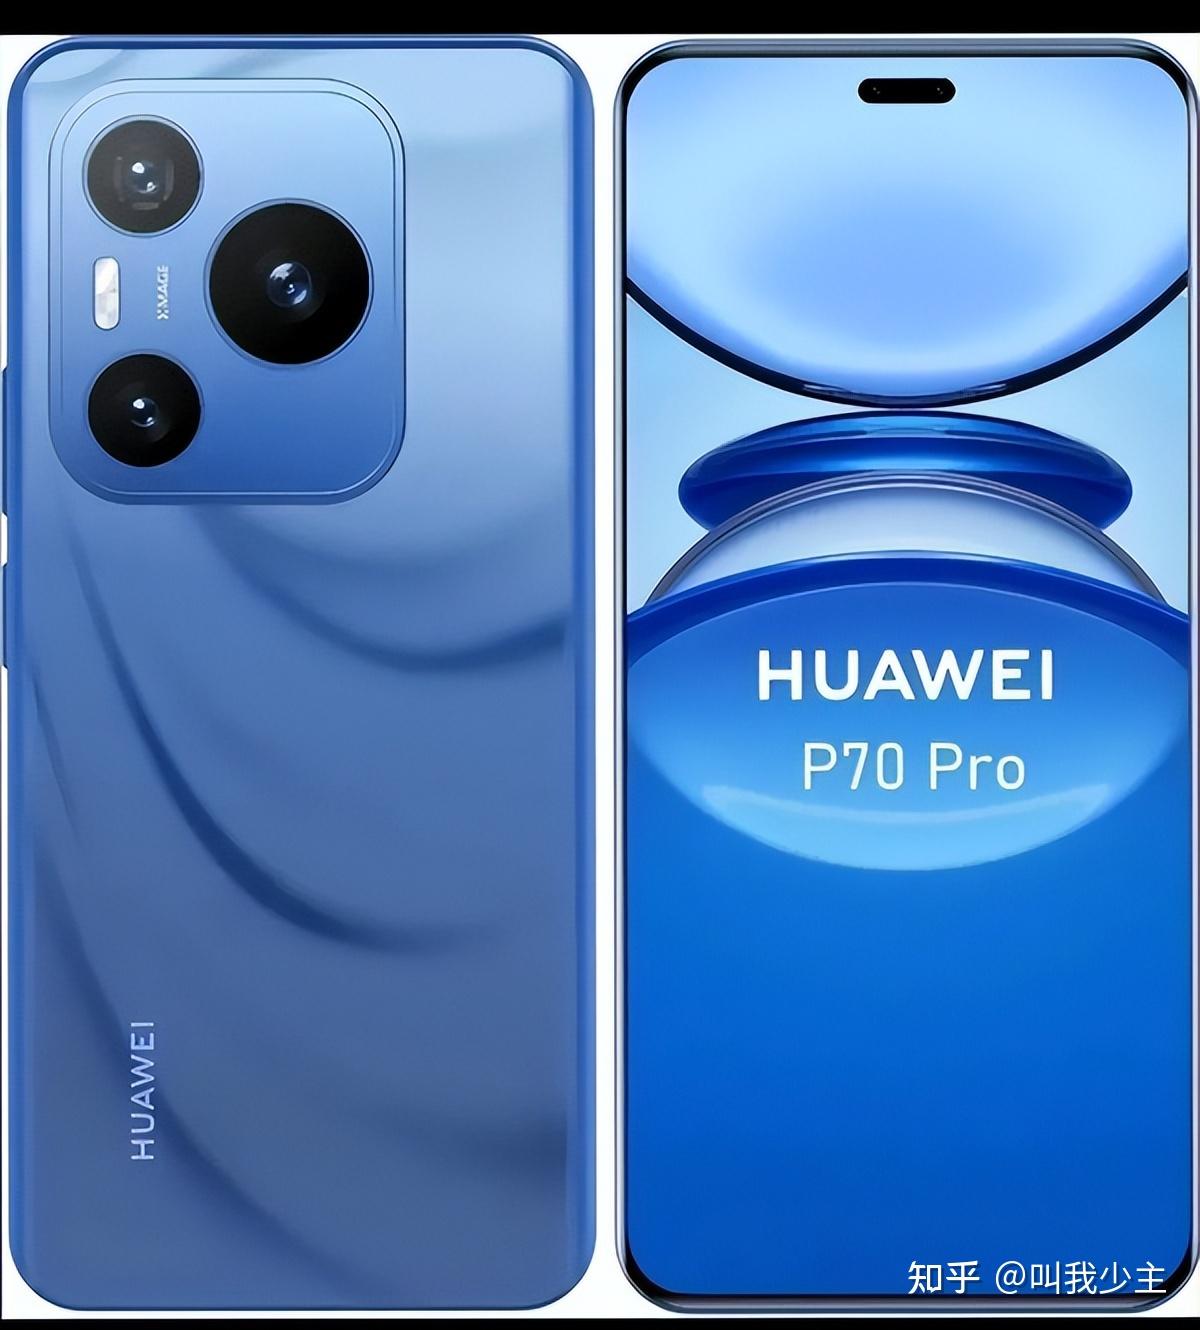 Huawei P70 Phone Renders and Design Leak Reveal Interesting Details